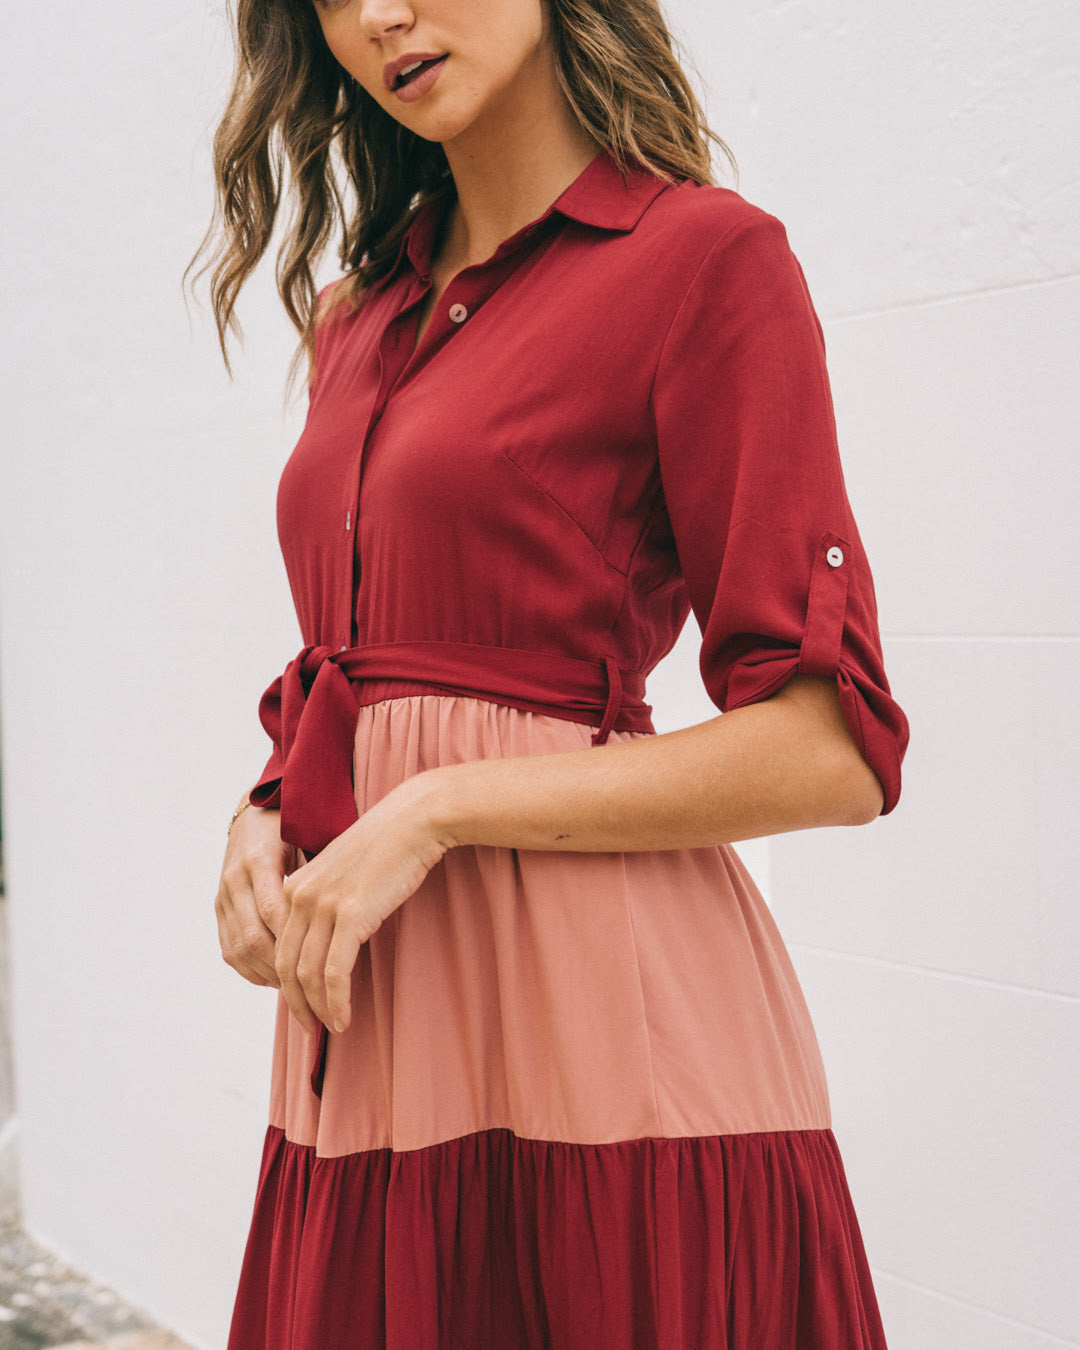 Cora Red & Pink Maxi Dress